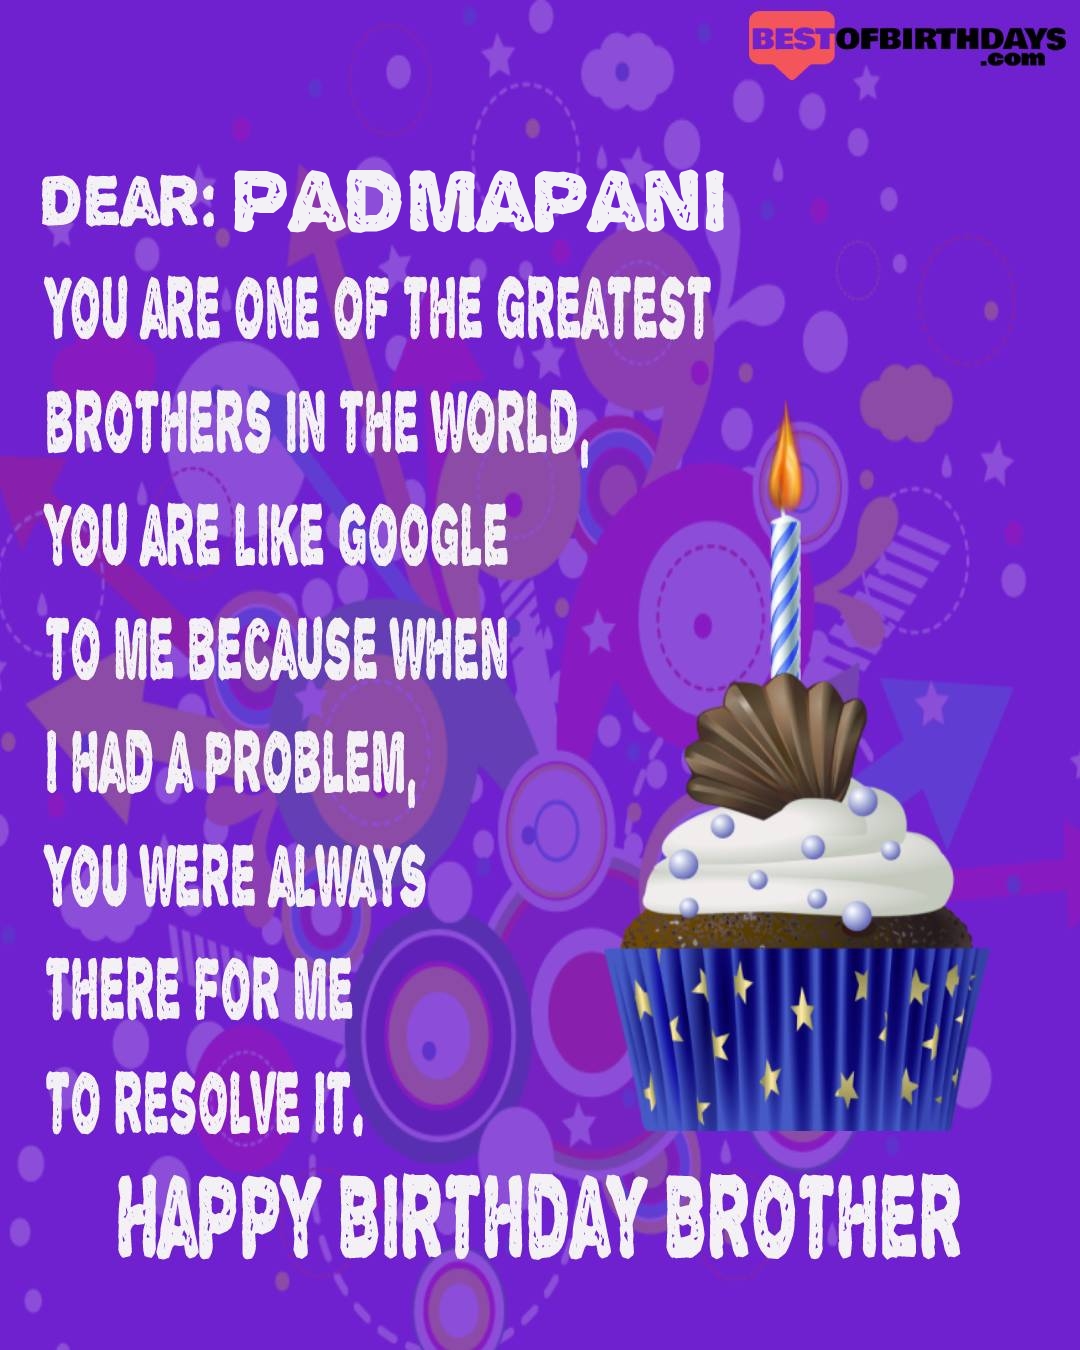 Happy birthday padmapani bhai brother bro